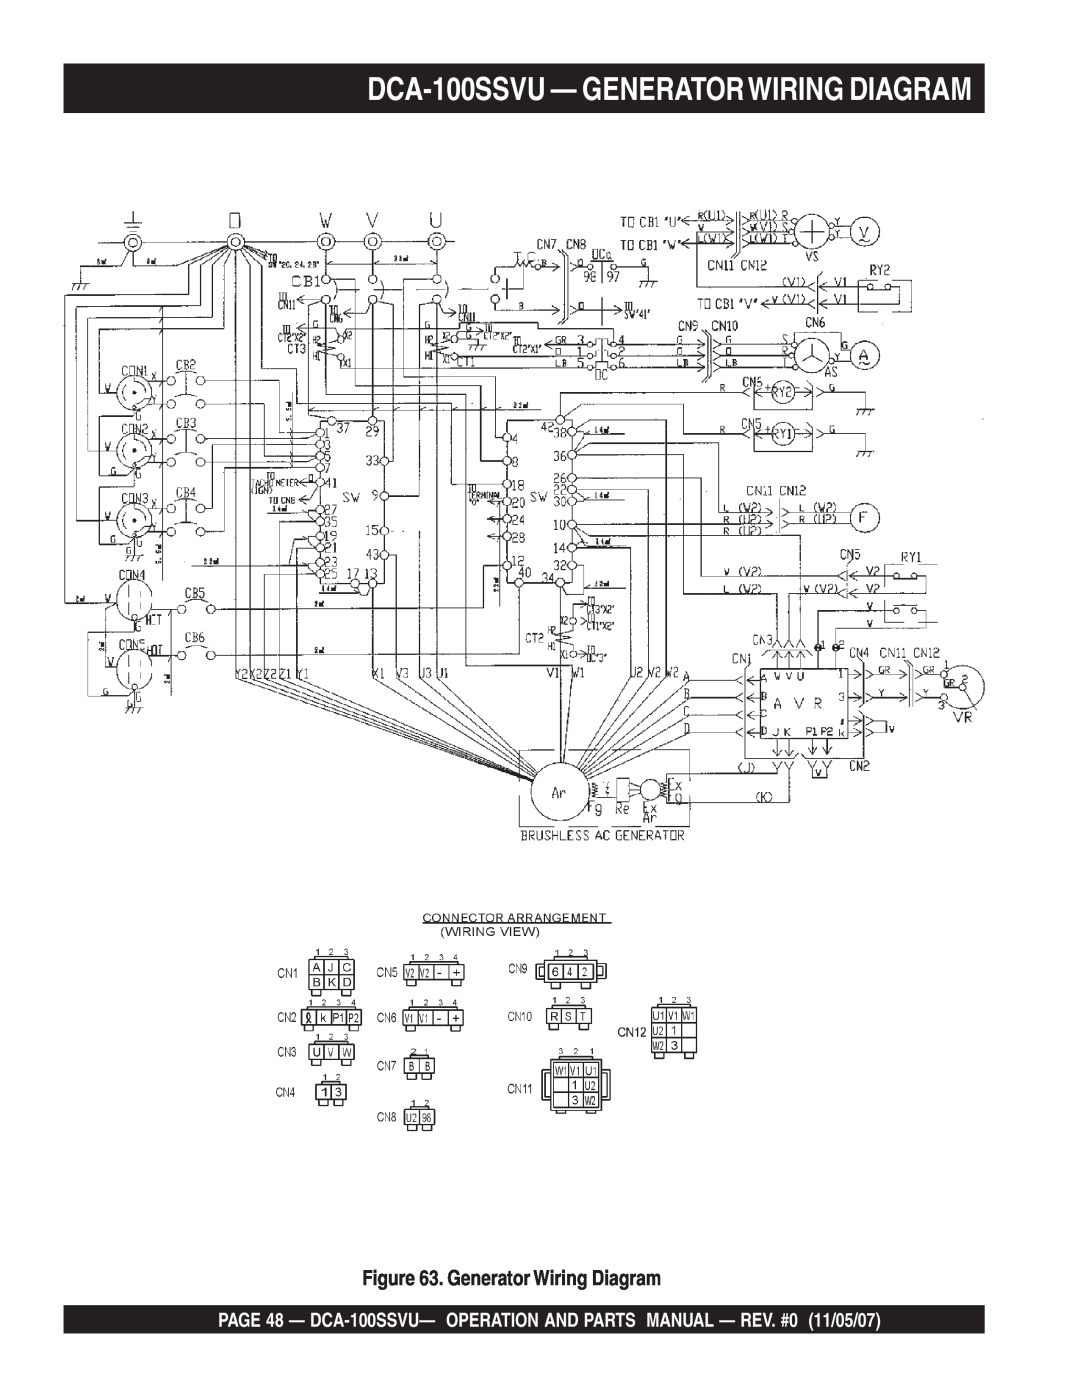 Multiquip operation manual DCA-100SSVU— GENERATORWIRING DIAGRAM, Generator Wiring Diagram 